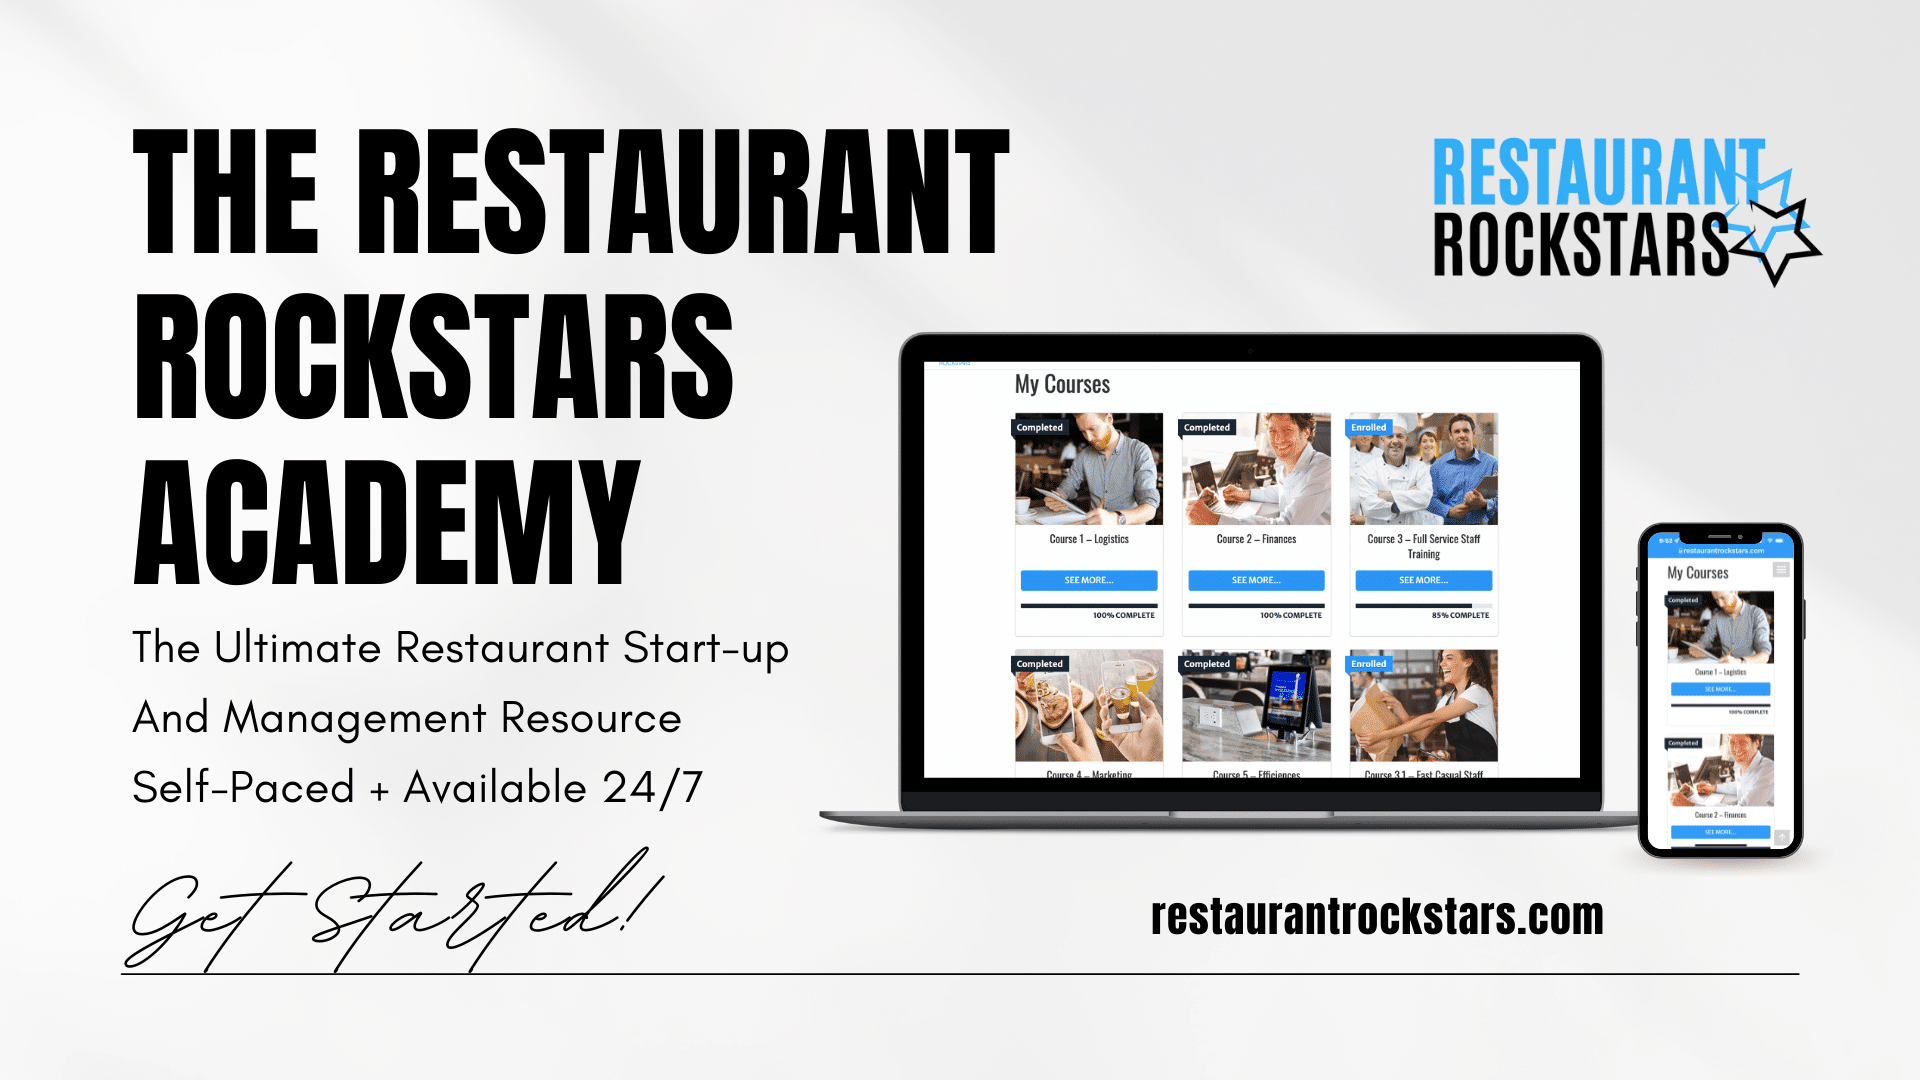 The Restaurant Rockstars Academy